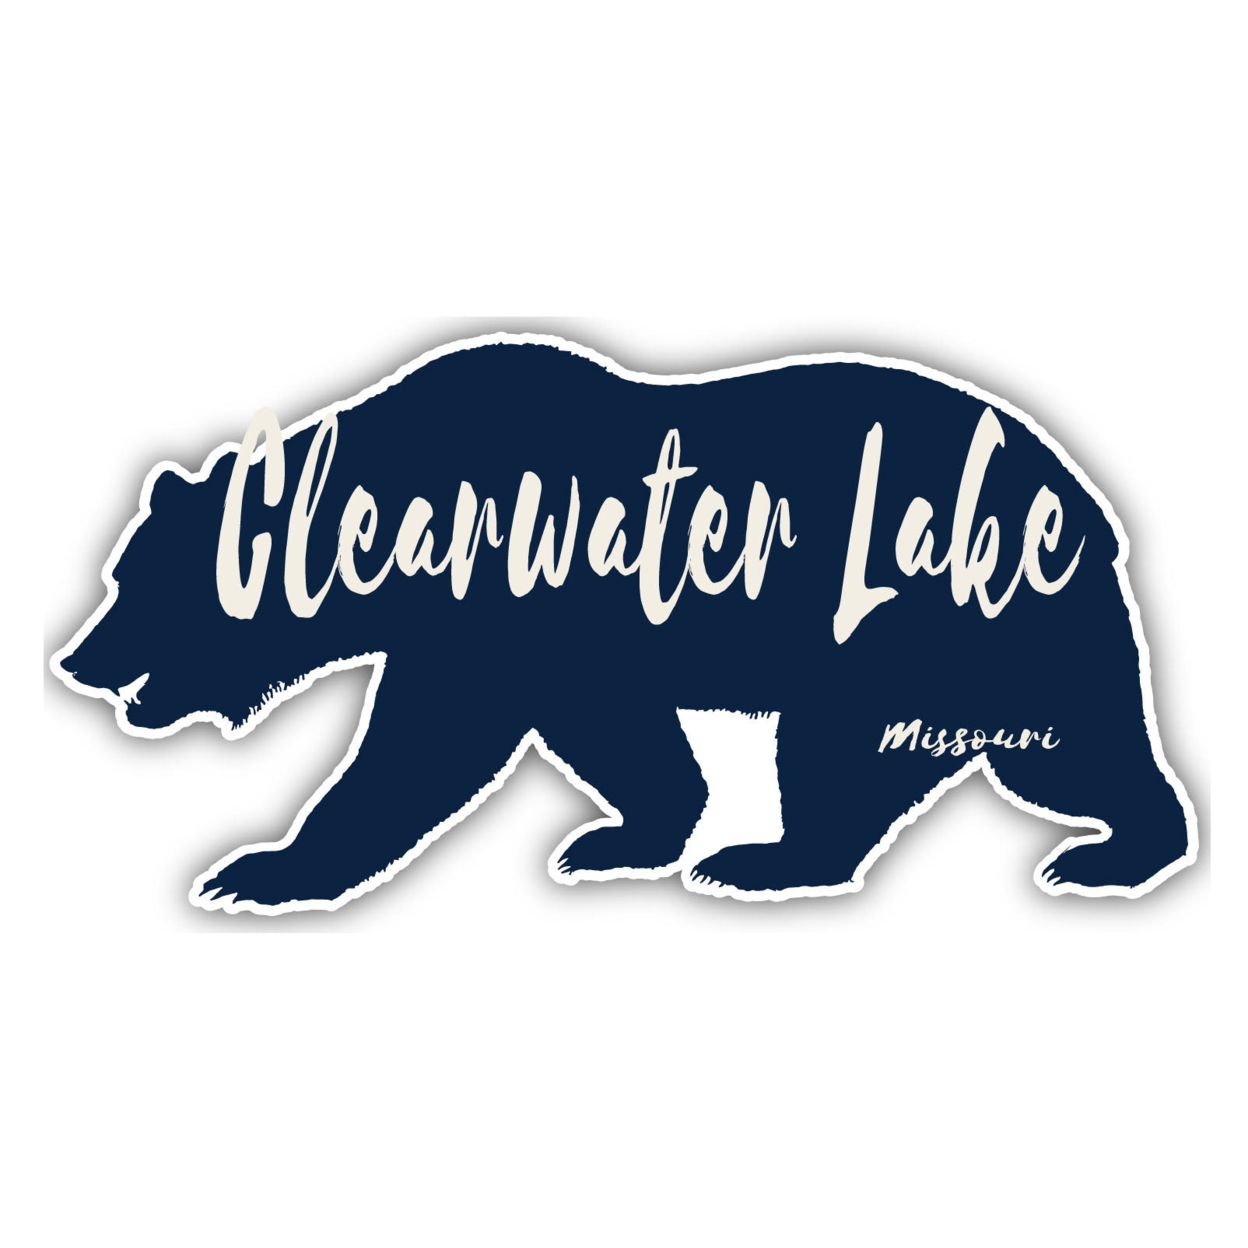 Clearwater Lake Missouri Souvenir Decorative Stickers (Choose Theme And Size) - Single Unit, 2-Inch, Bear